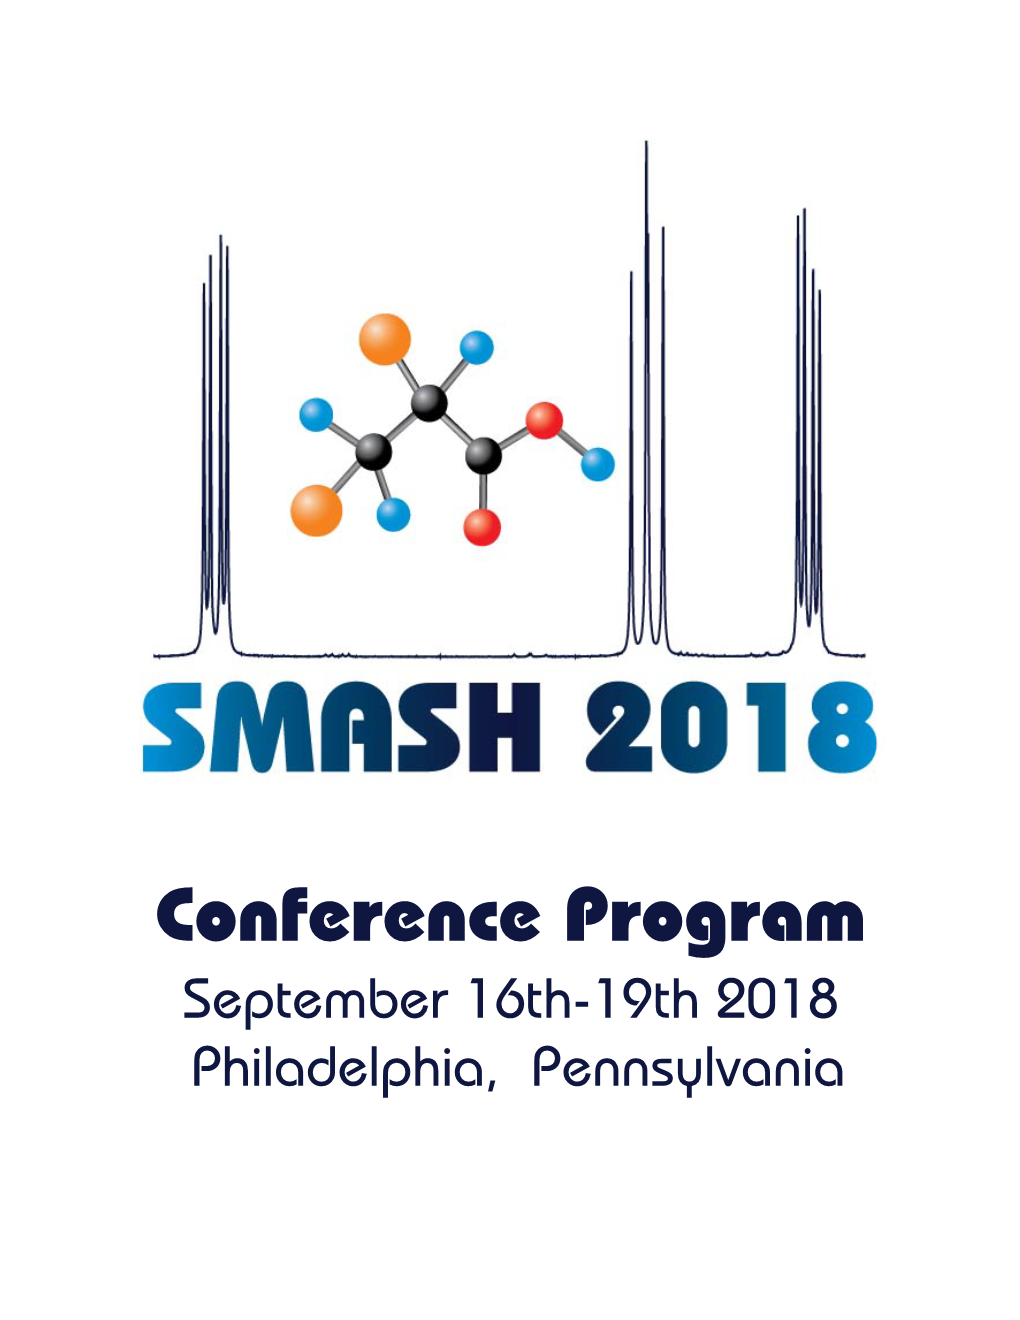 SMASH 2018 NMR Conference